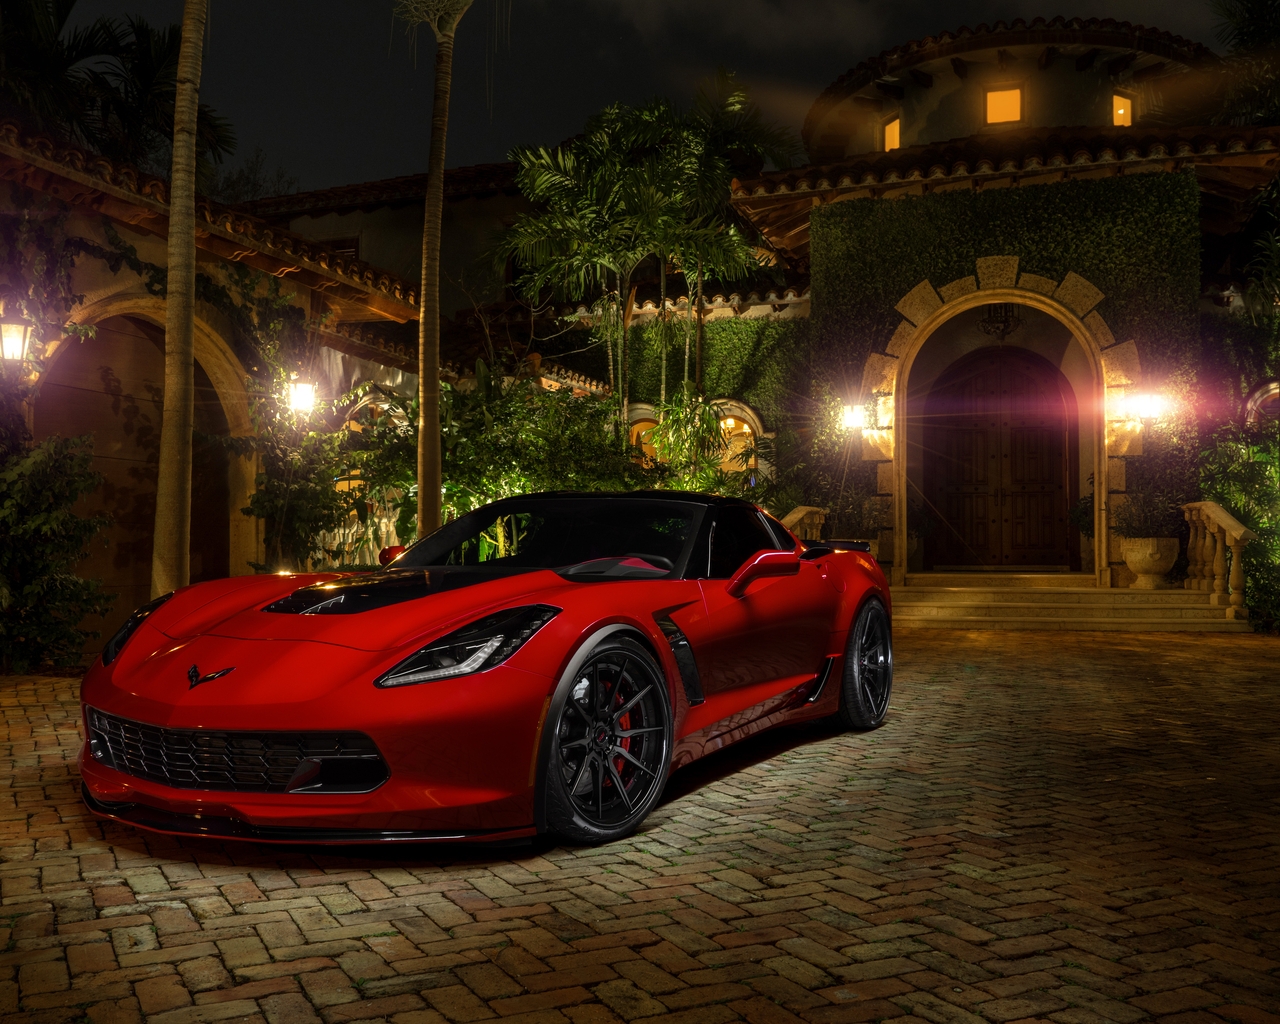 Image: Chevrolet, Corvette, red, night, lights, building